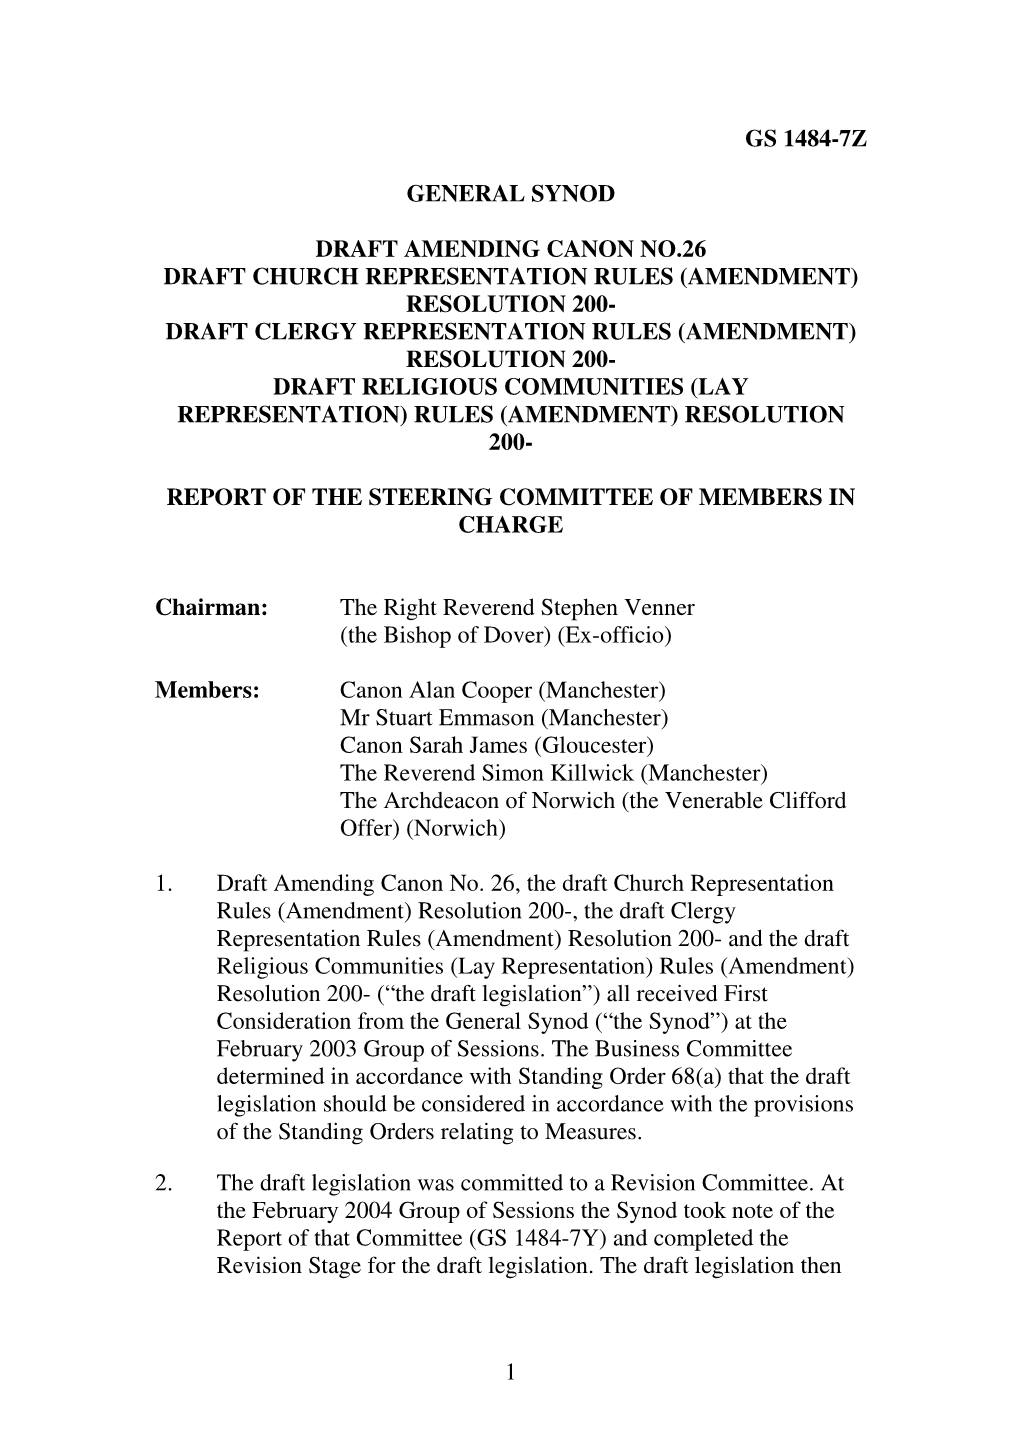 Draft Clergy Representation Rules (Amendment) Resolution 200- Draft Religious Communities (Lay Representation) Rules (Amendment) Resolution 200